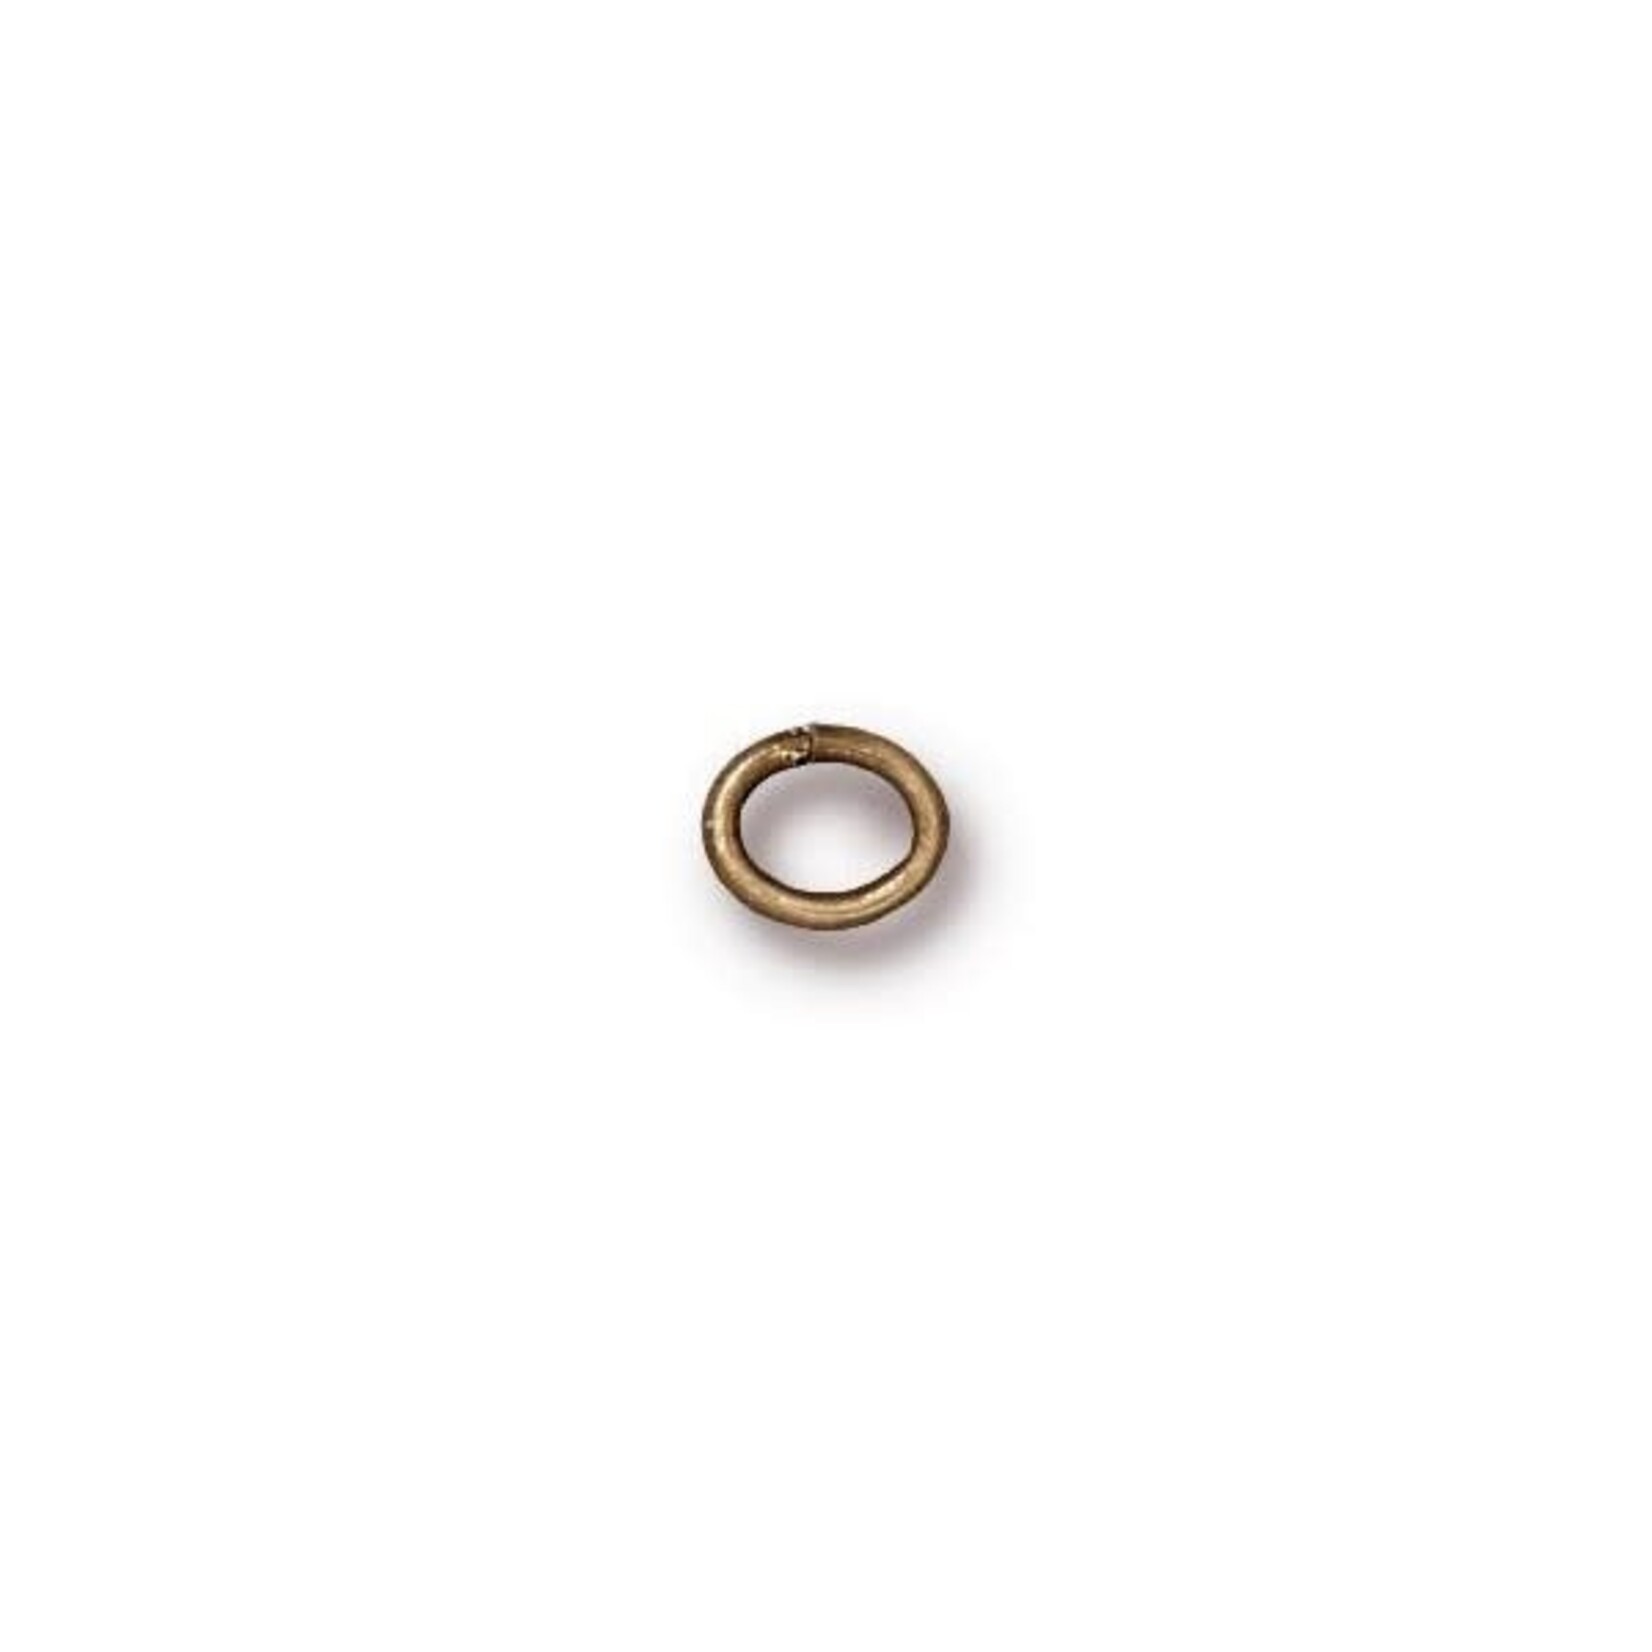 TierraCast Oval Jump Ring 20 Ga, 4x3mm ID Oxidized Brass - 500 pieces